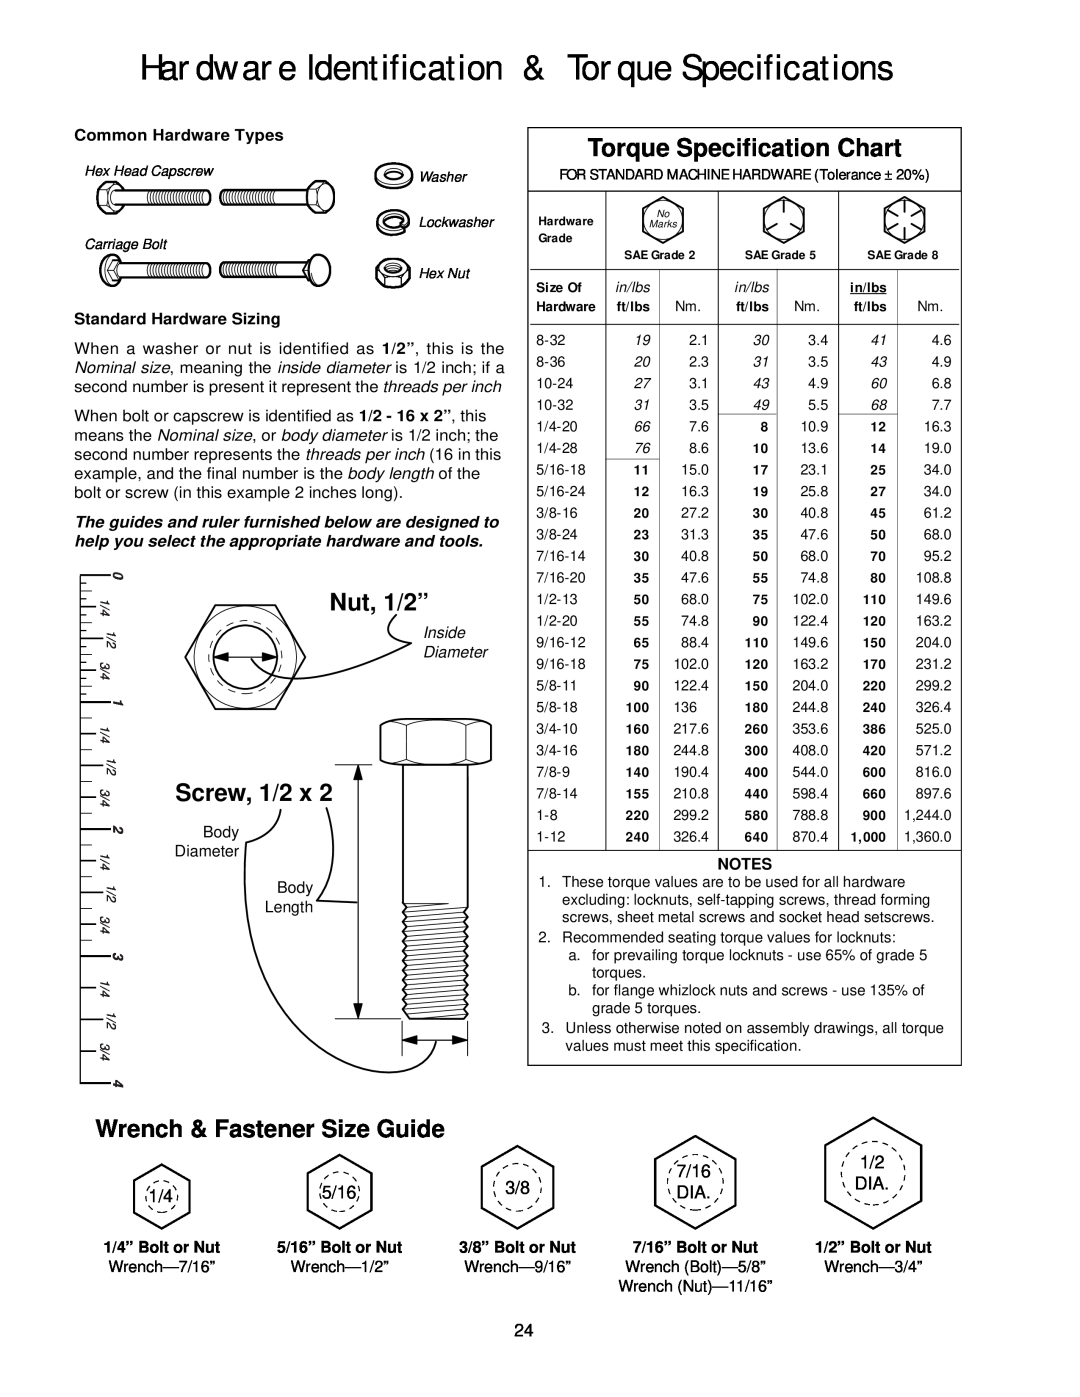 Snapper 2137 manual Hardware Identification & Torque Specifications, Torque Specification Chart, Nut, 1/2”, Screw, 1/2 